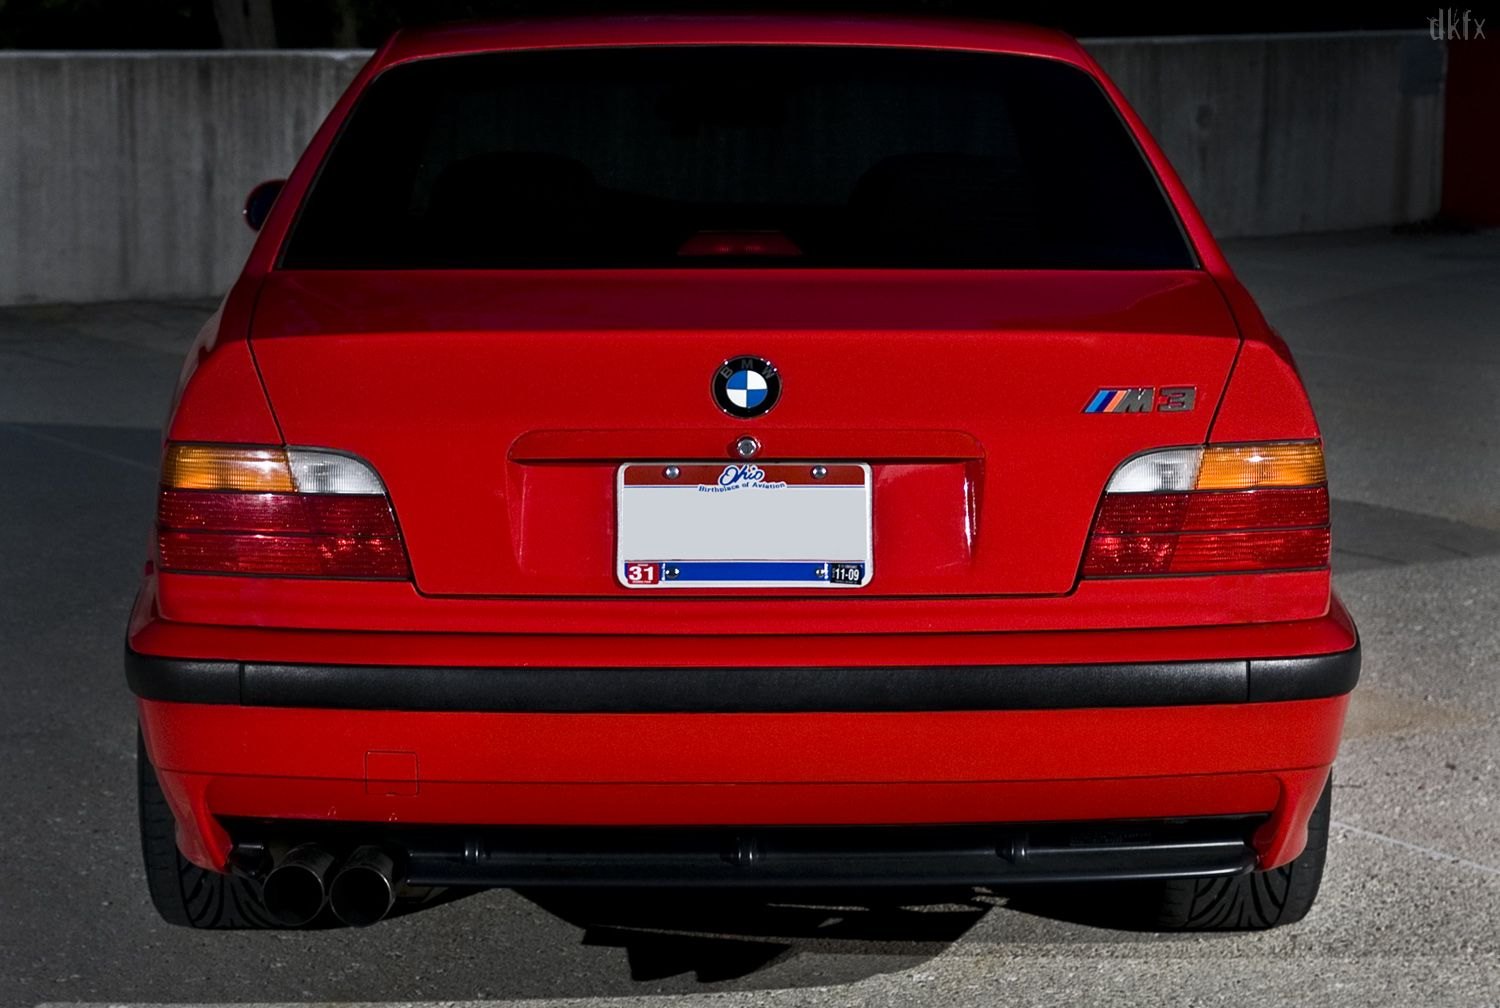 Red Taillights on Custom BMW 3-Series - Photo by dan kinzie